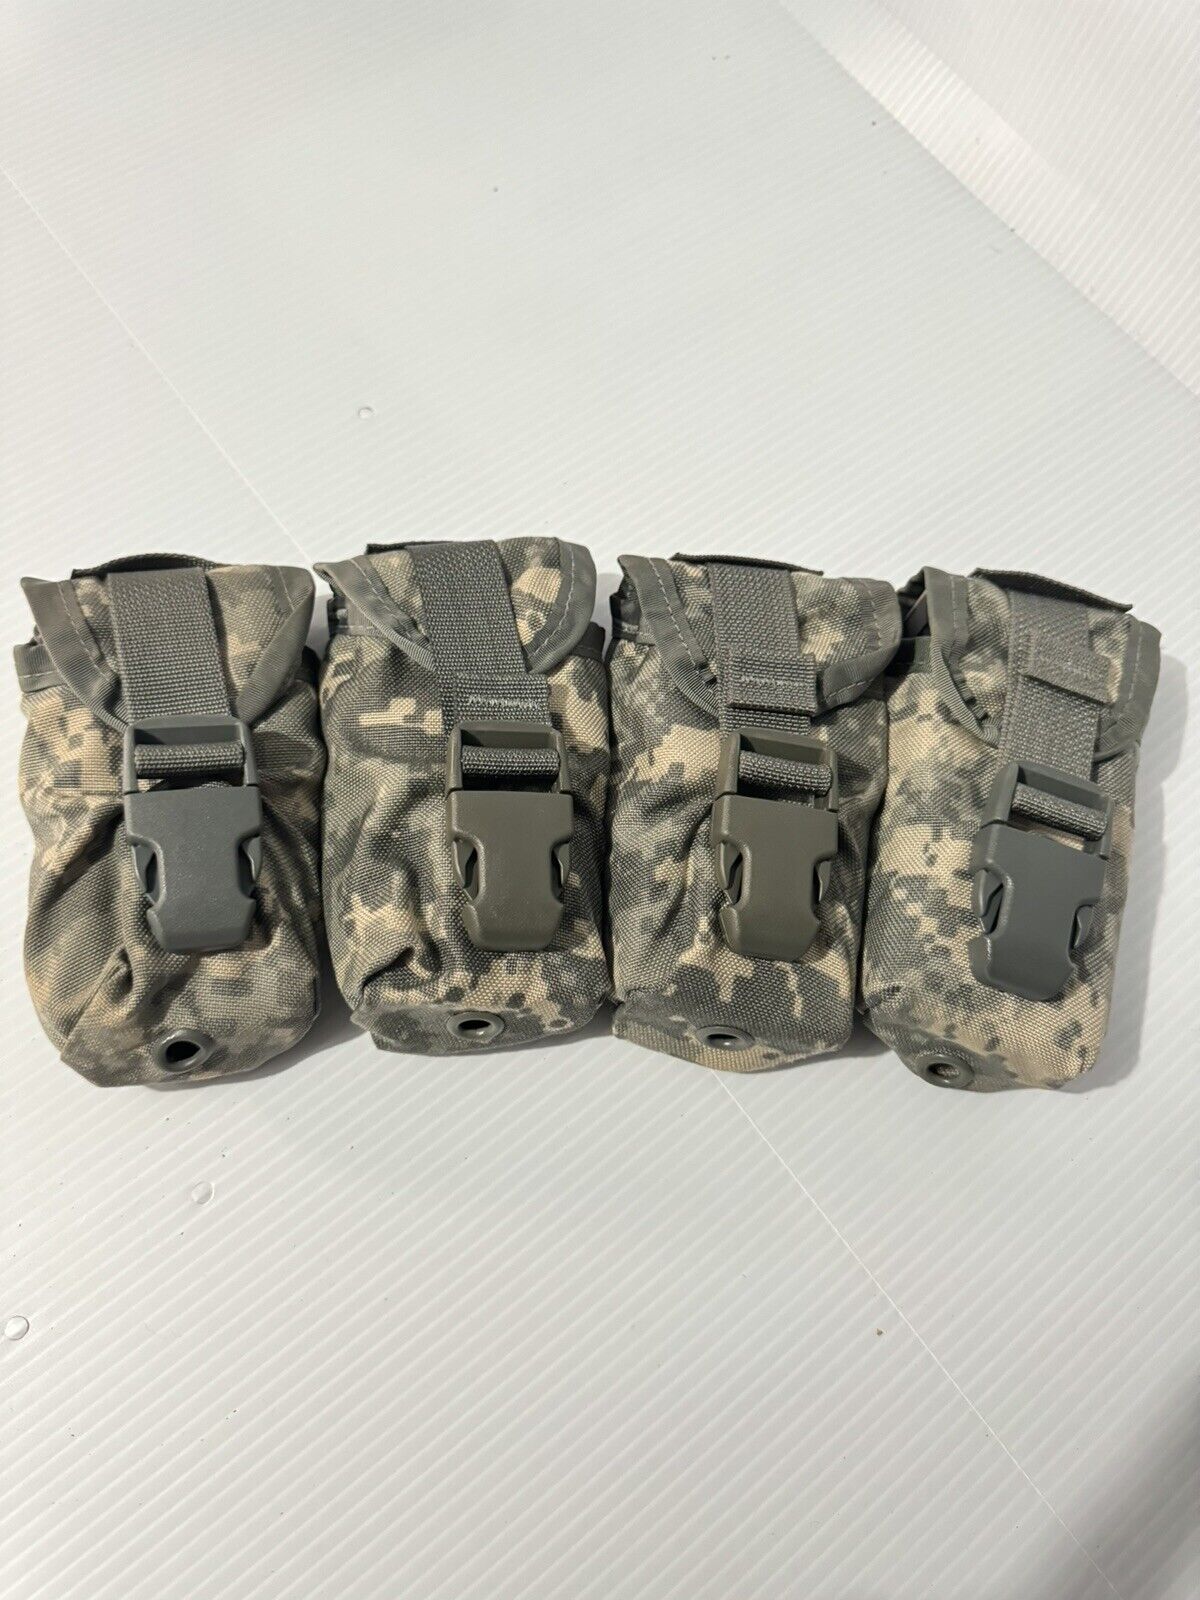 4 - USGI US Military Molle II Army ACU UCP Digital Camo Flash Bang Grenade Pouch